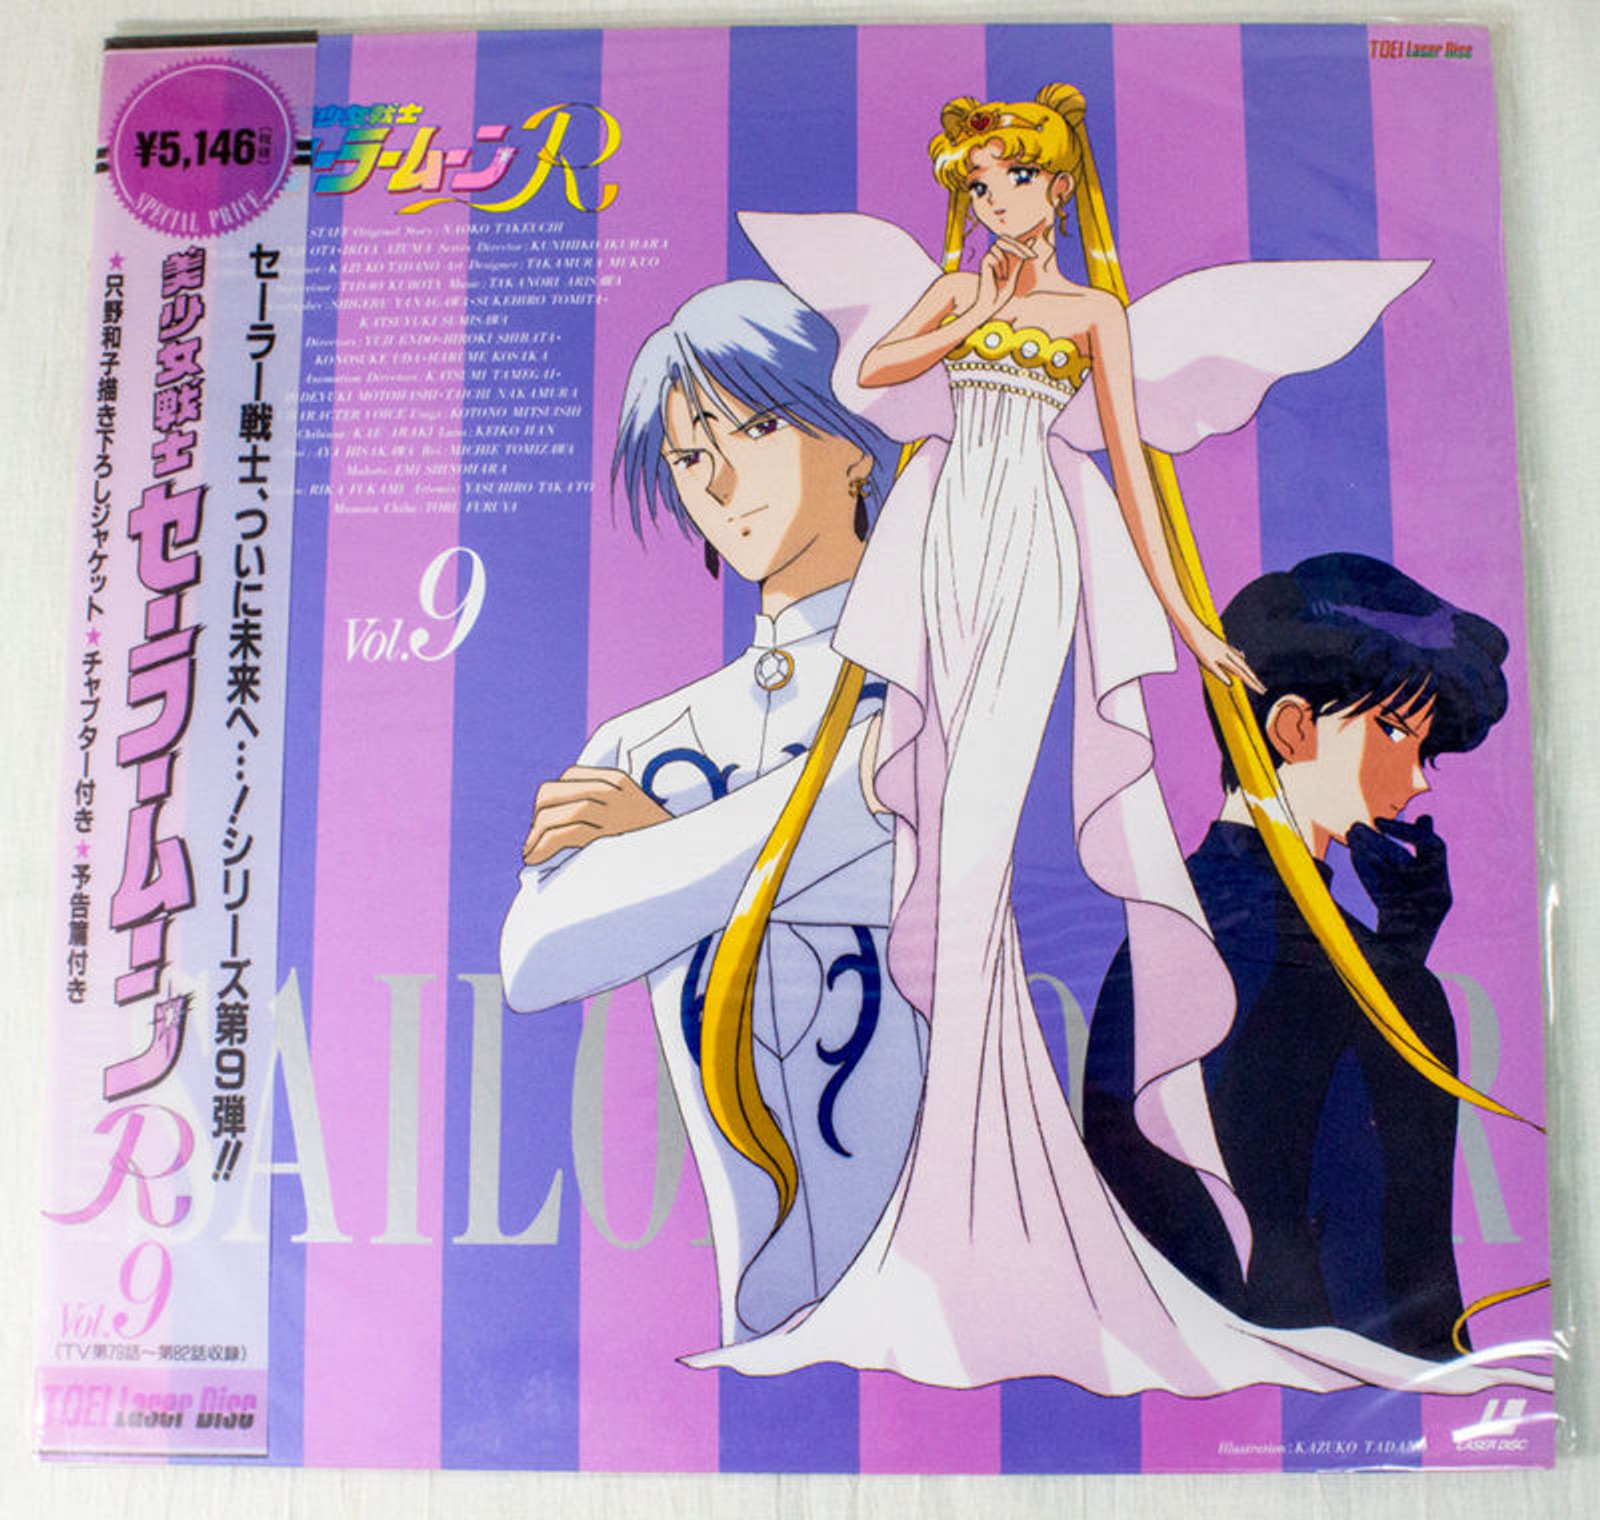 Sailor Moon R Vol.9 Laser Disc LD JAPAN ANIME MANGA